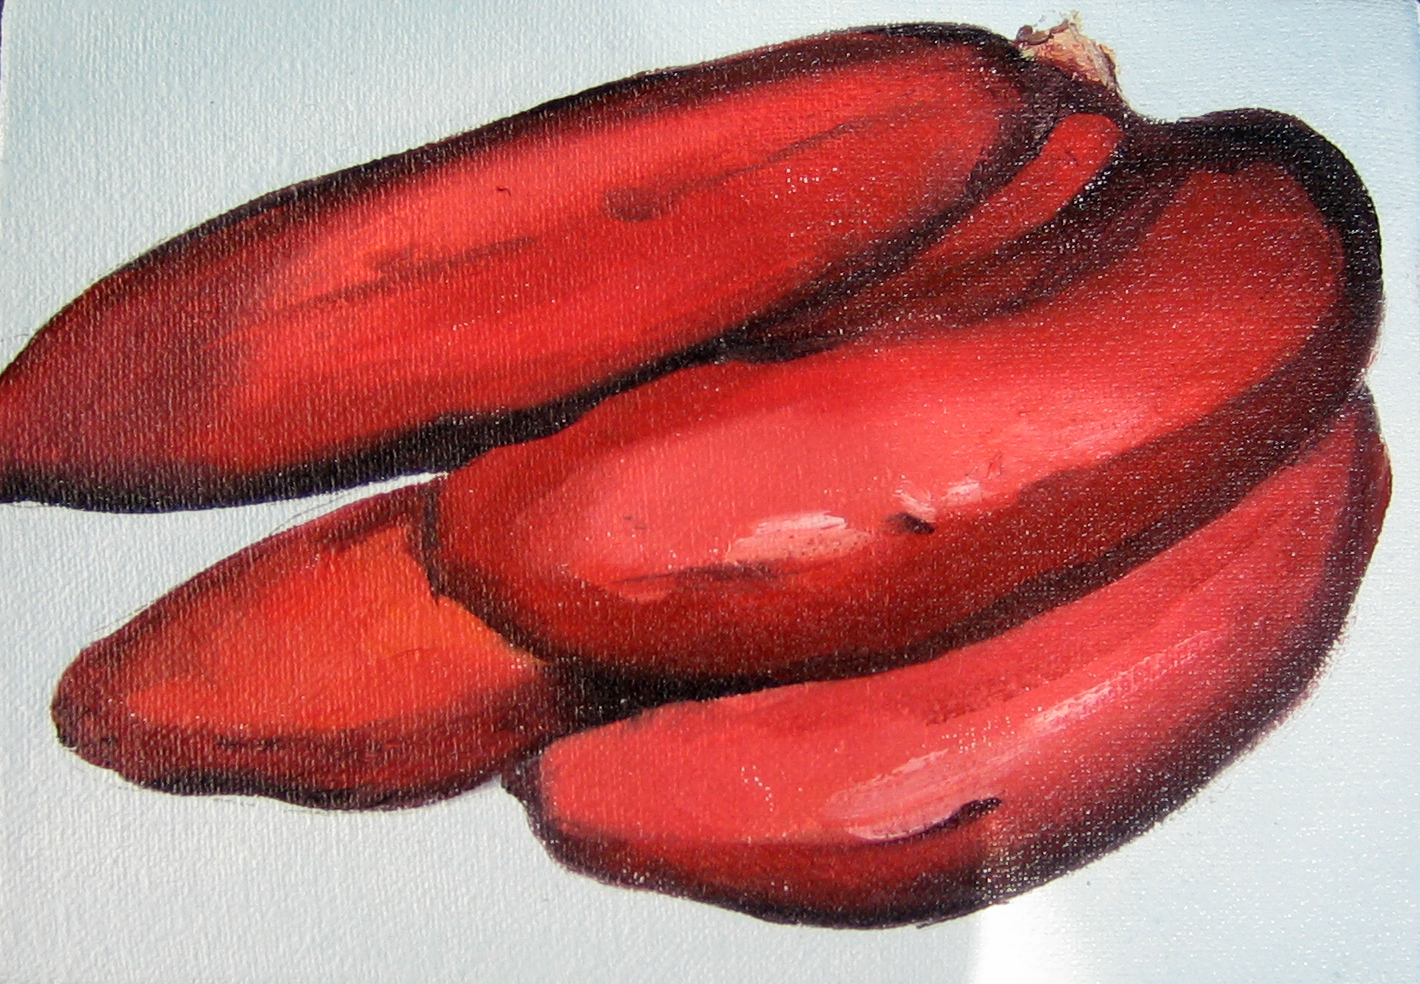 2009, 14x20cm, oil on canvas